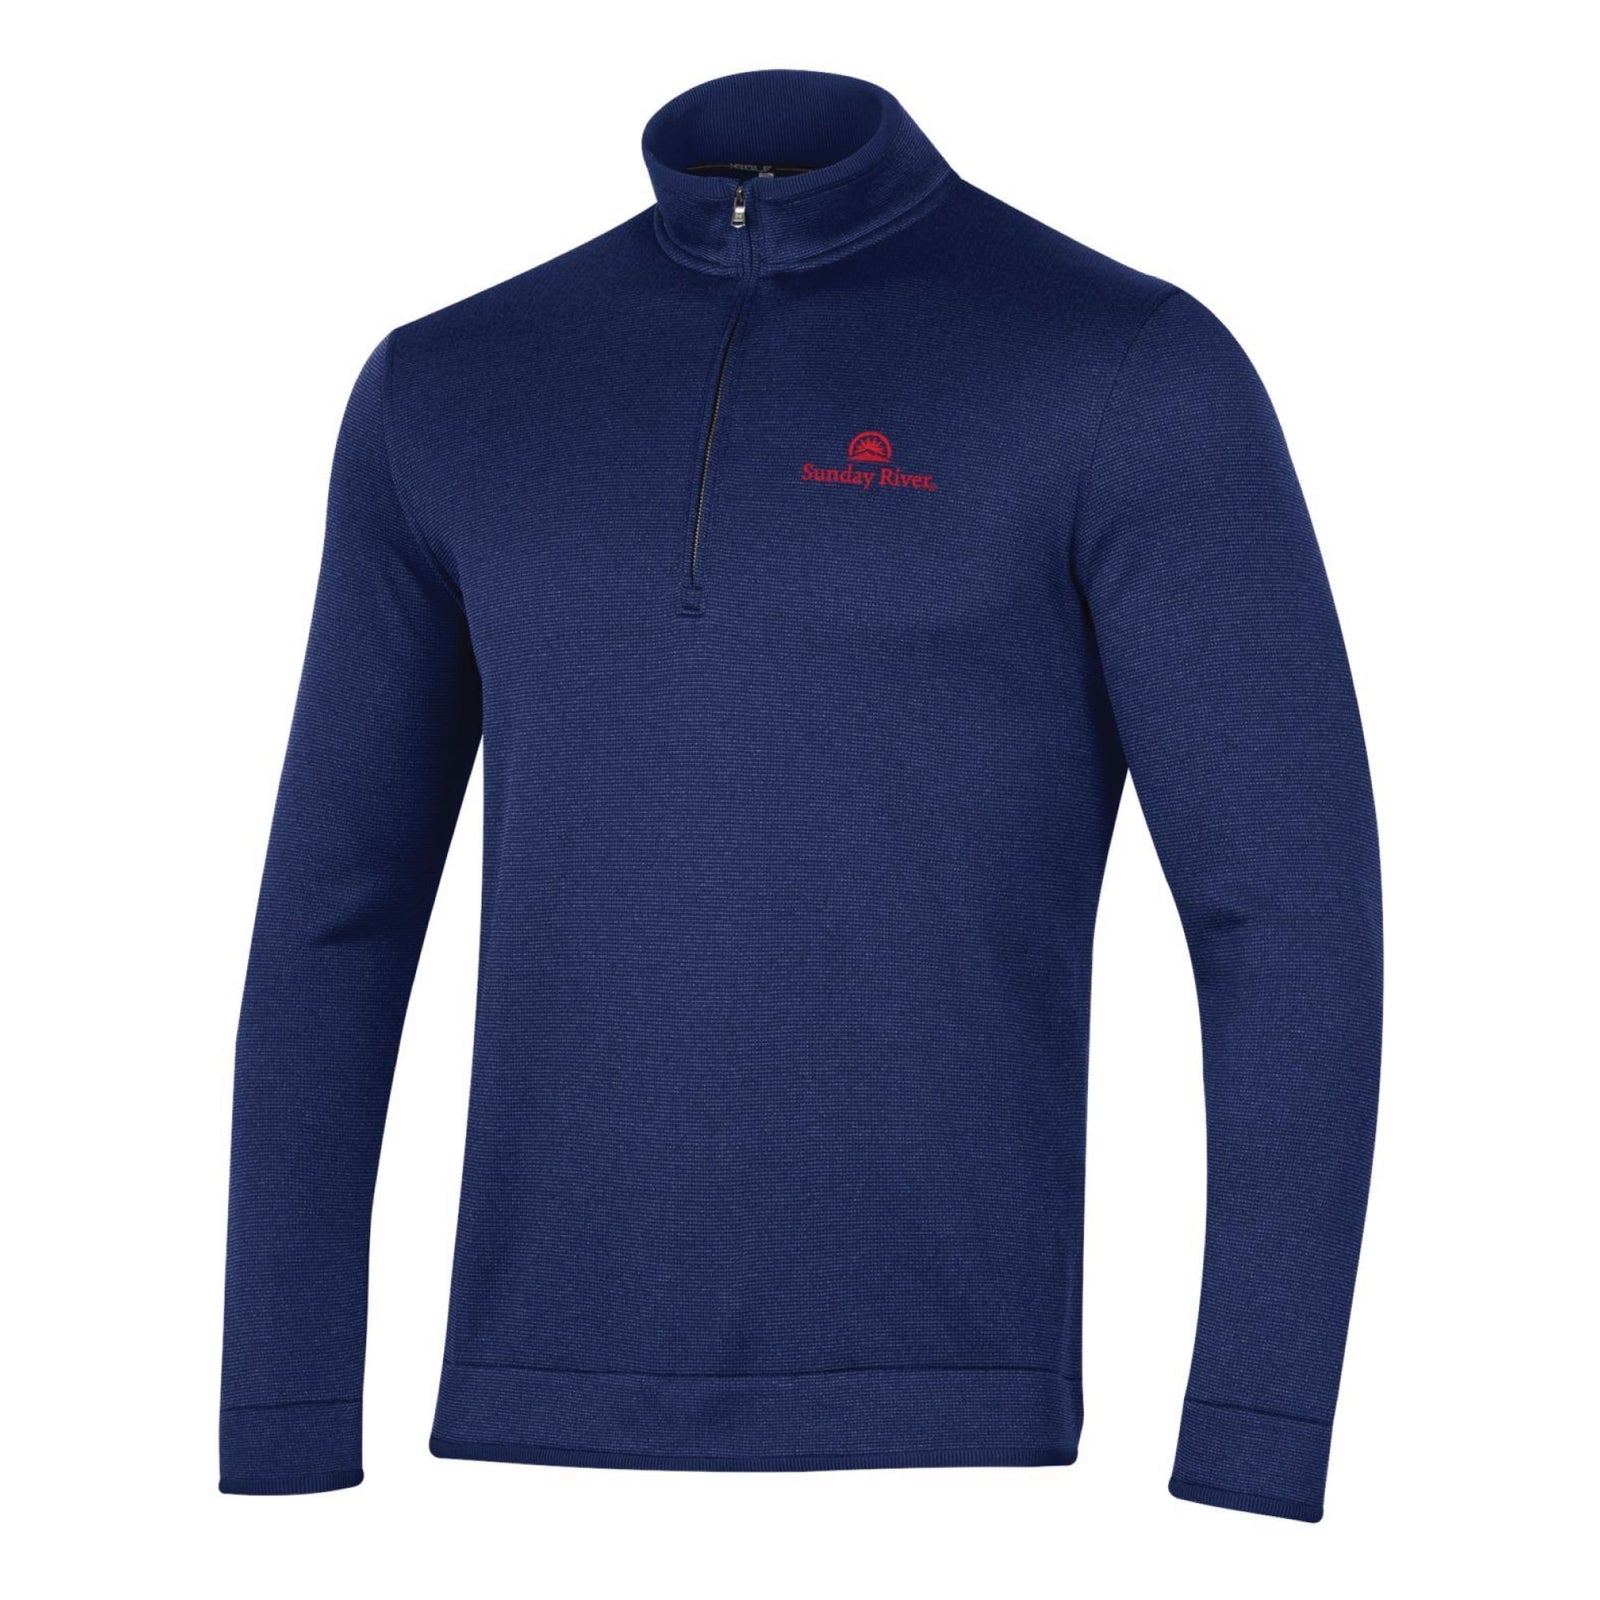 Sunday River Men's Speck 1/4-Zip Under Armour Sweater Fleece SMALL